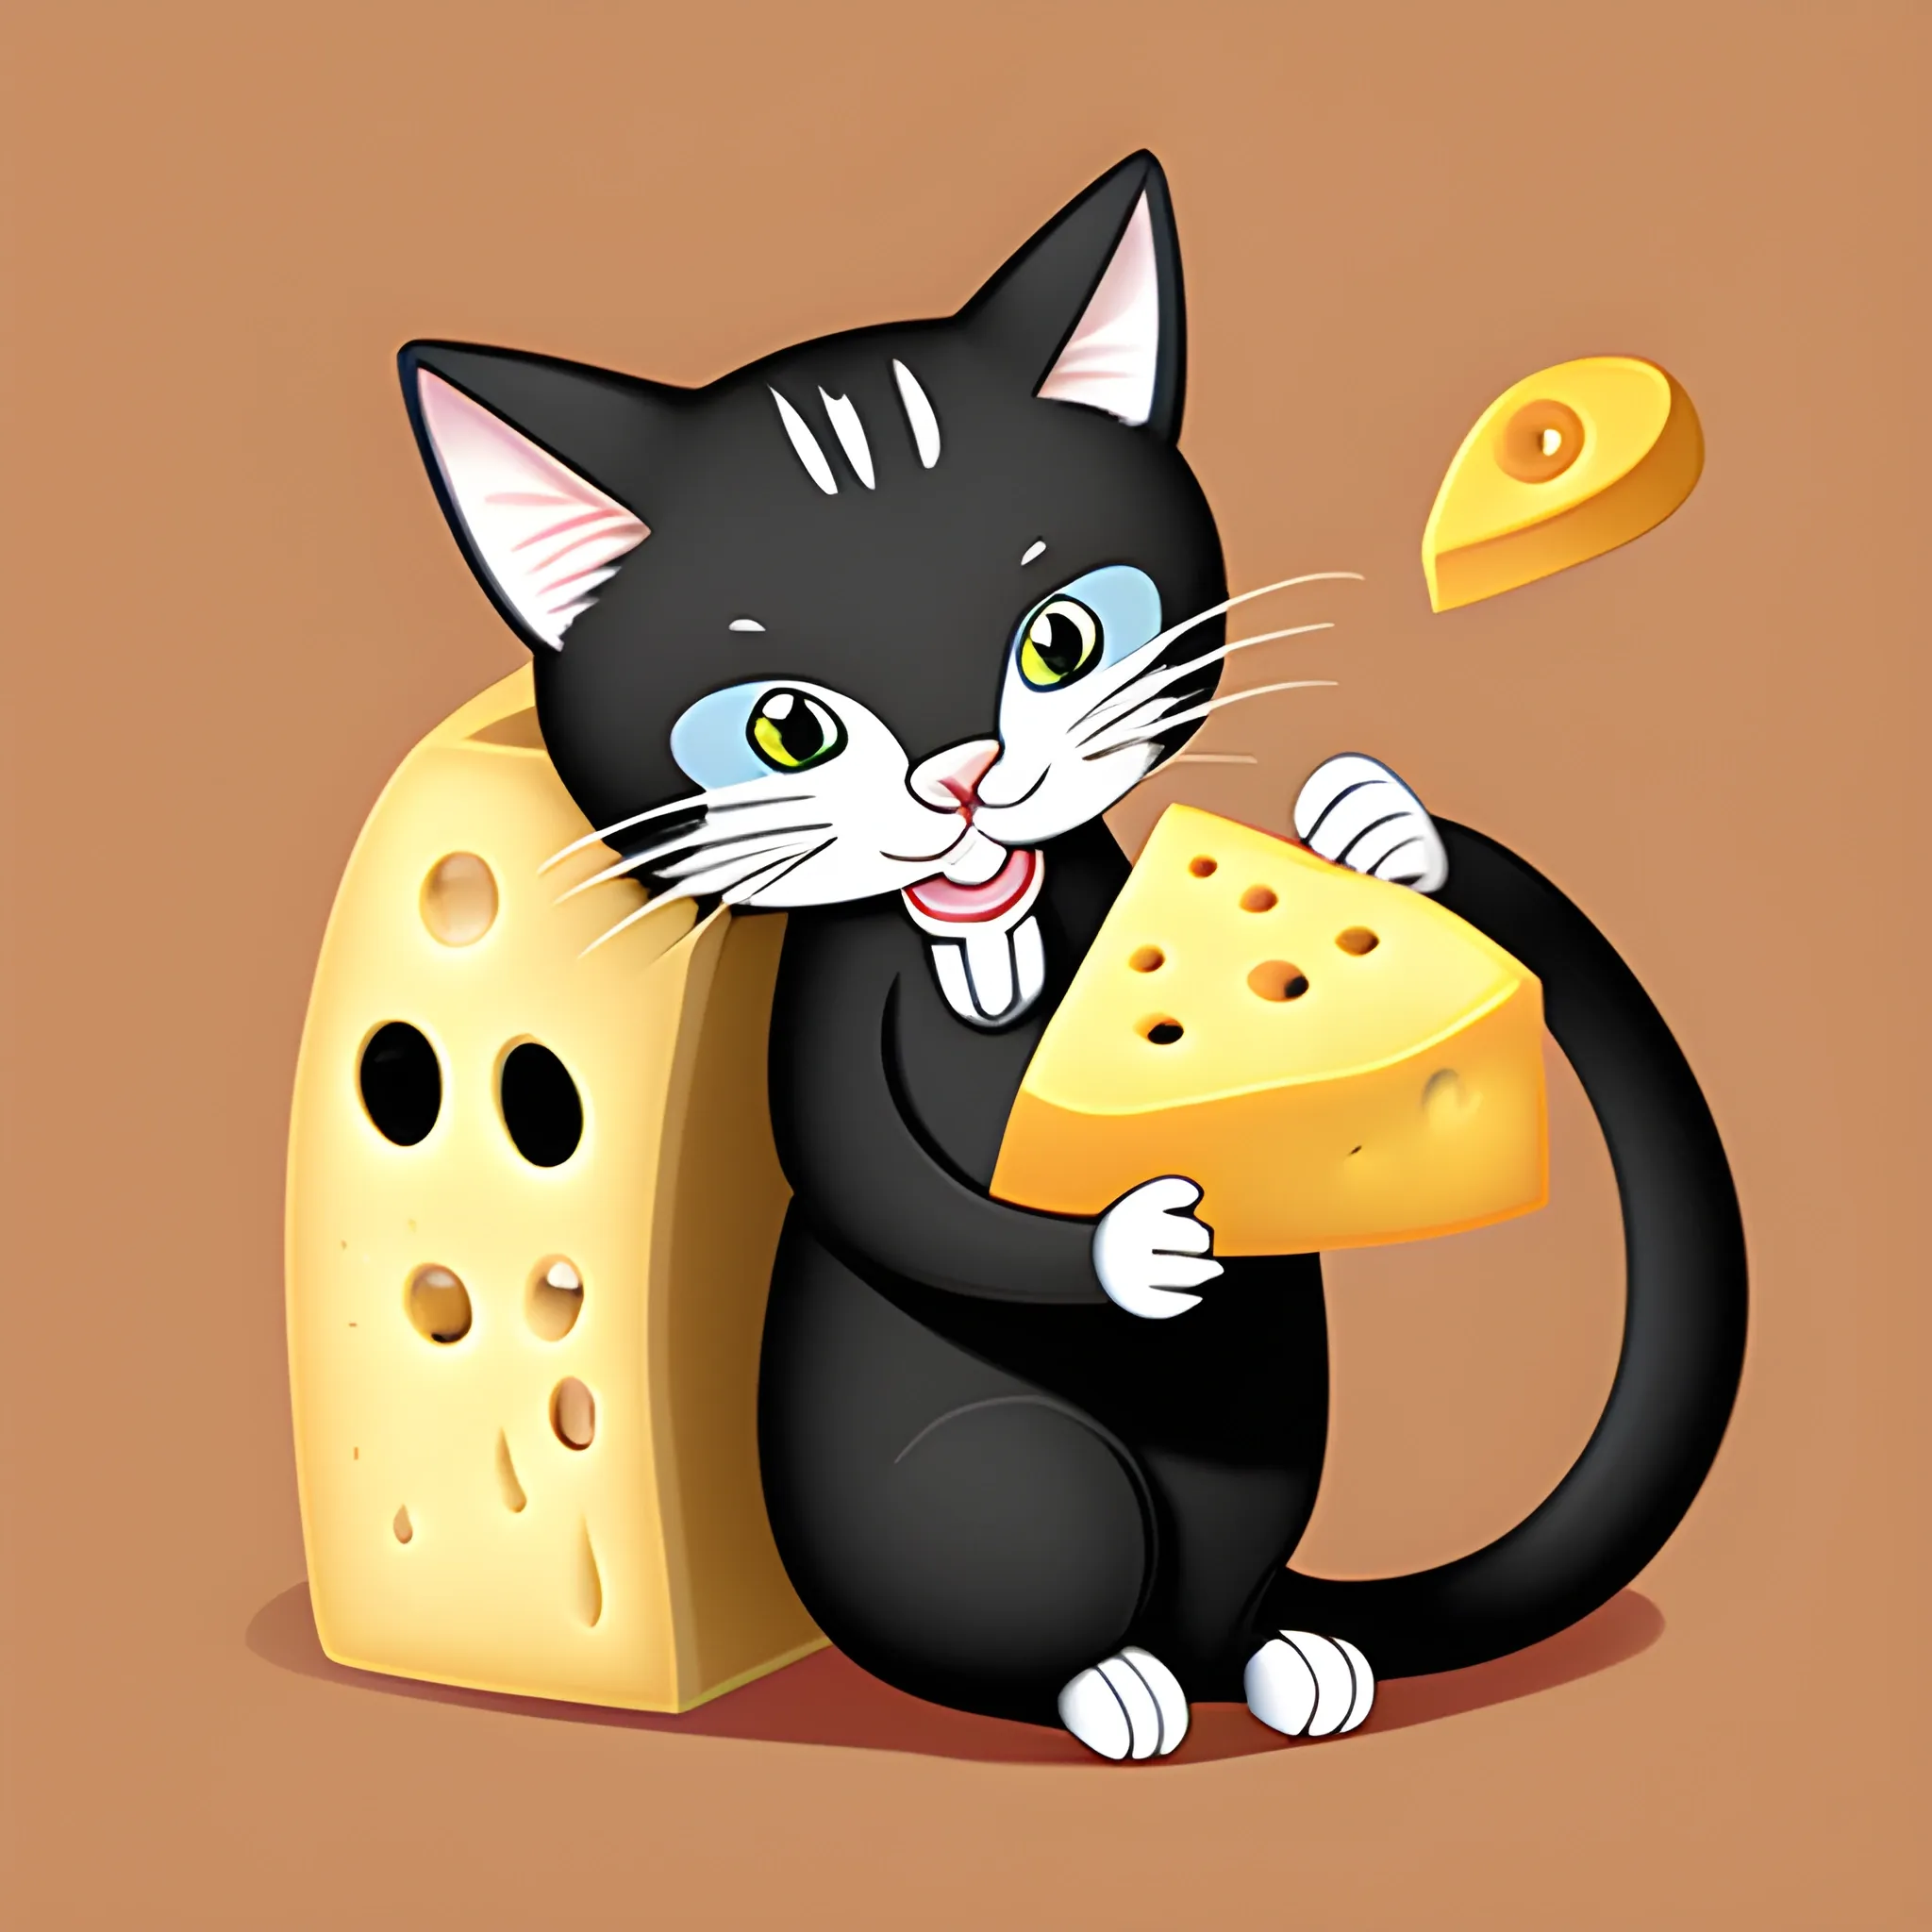 A cartoon cat holding cheese